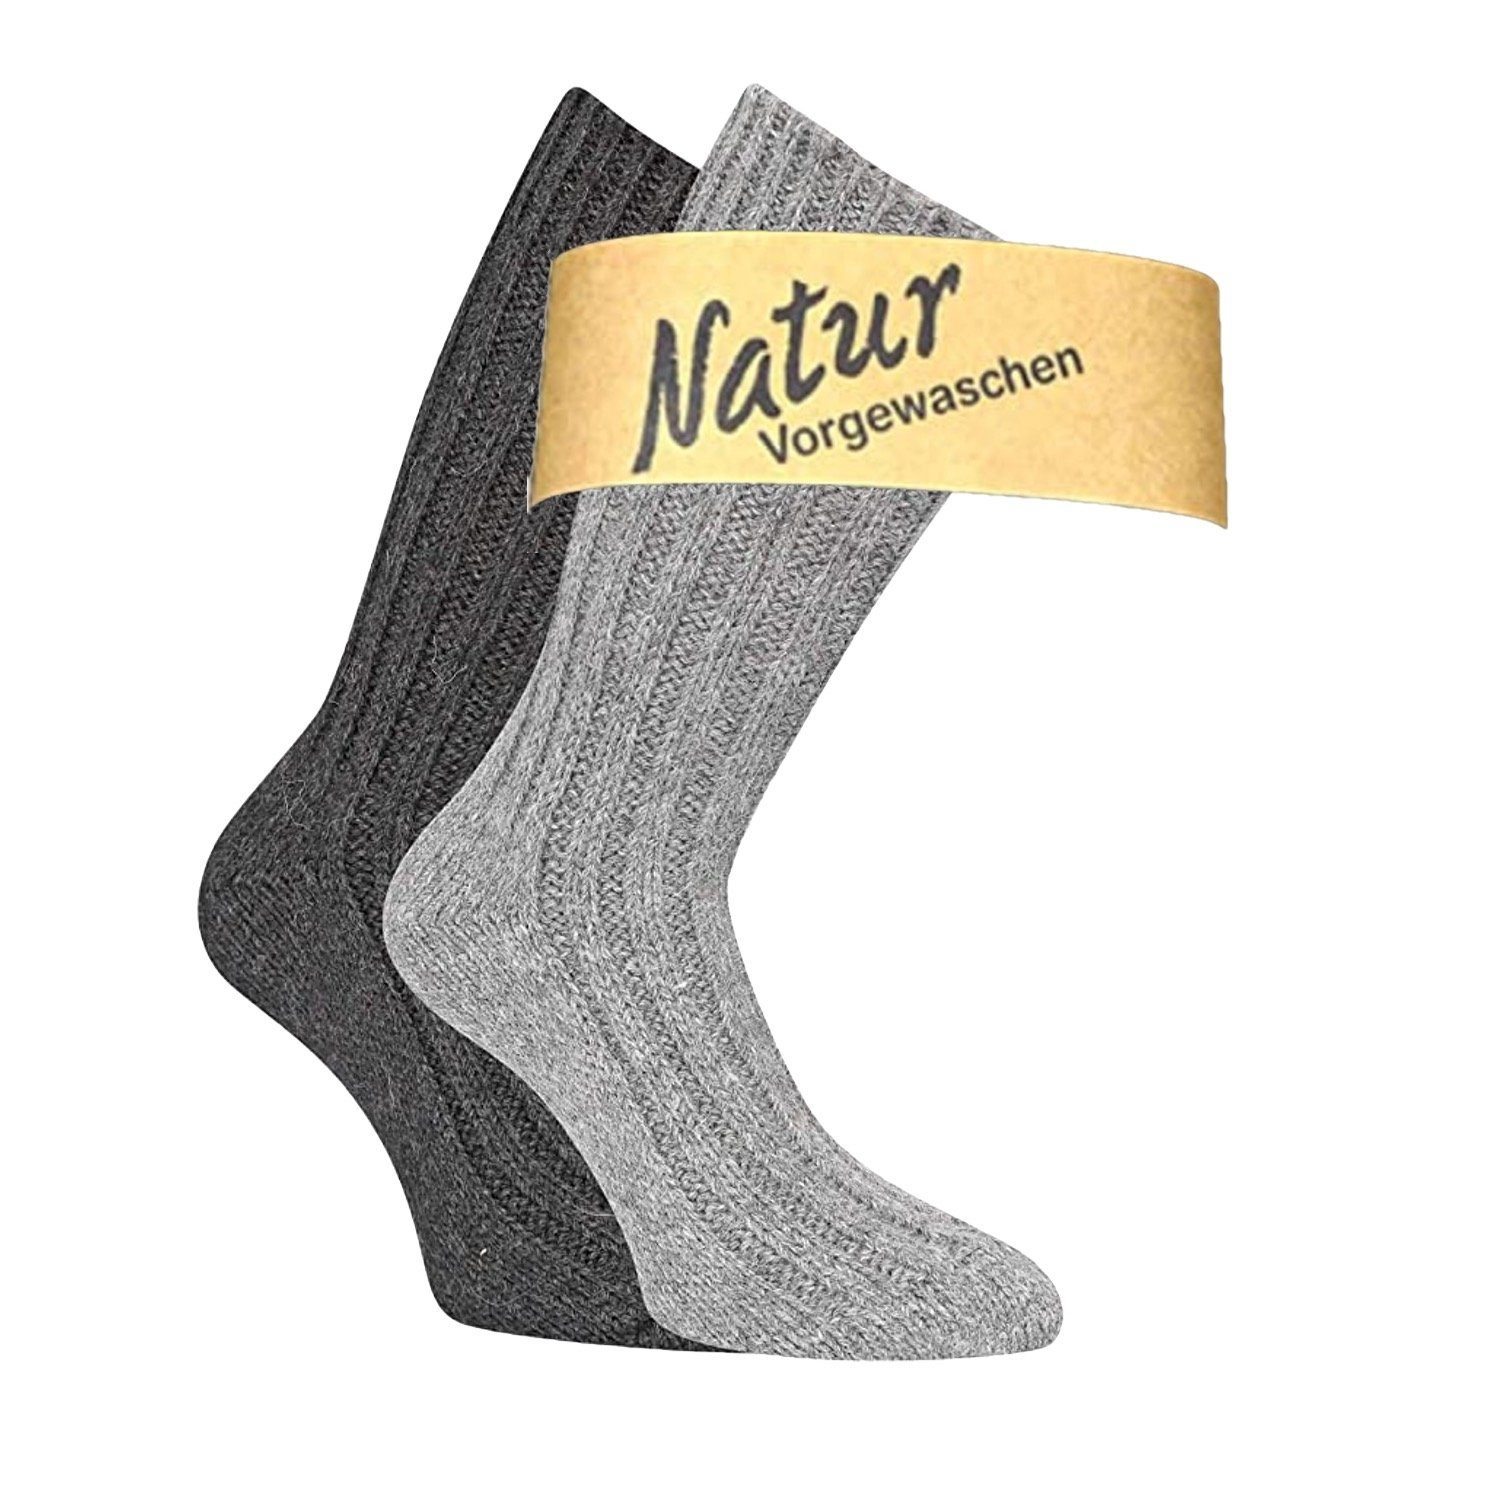 grau-schwarz underwear (2-Paar) Socken Cocain Socken Alpaka selbst wie gestrickt Stricksocken Wollsocken